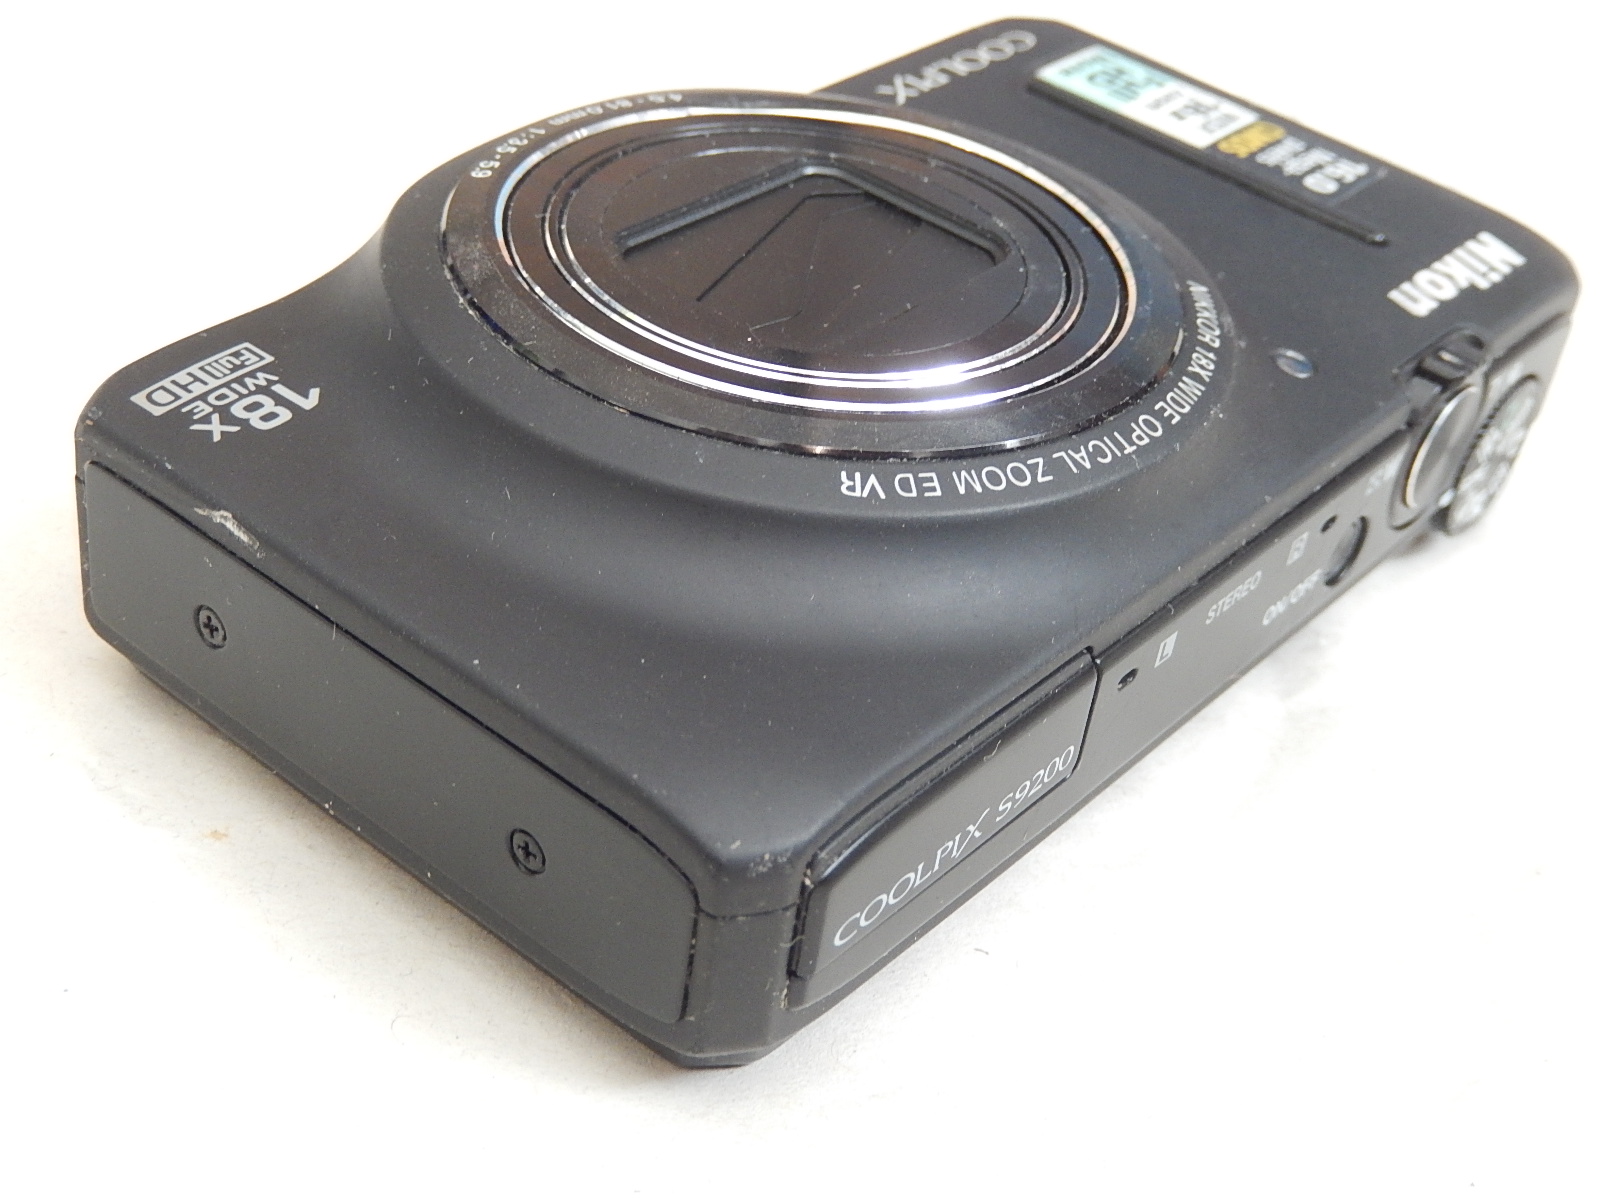 NIKON COOLPIX S9200 appareil photo hors serivce